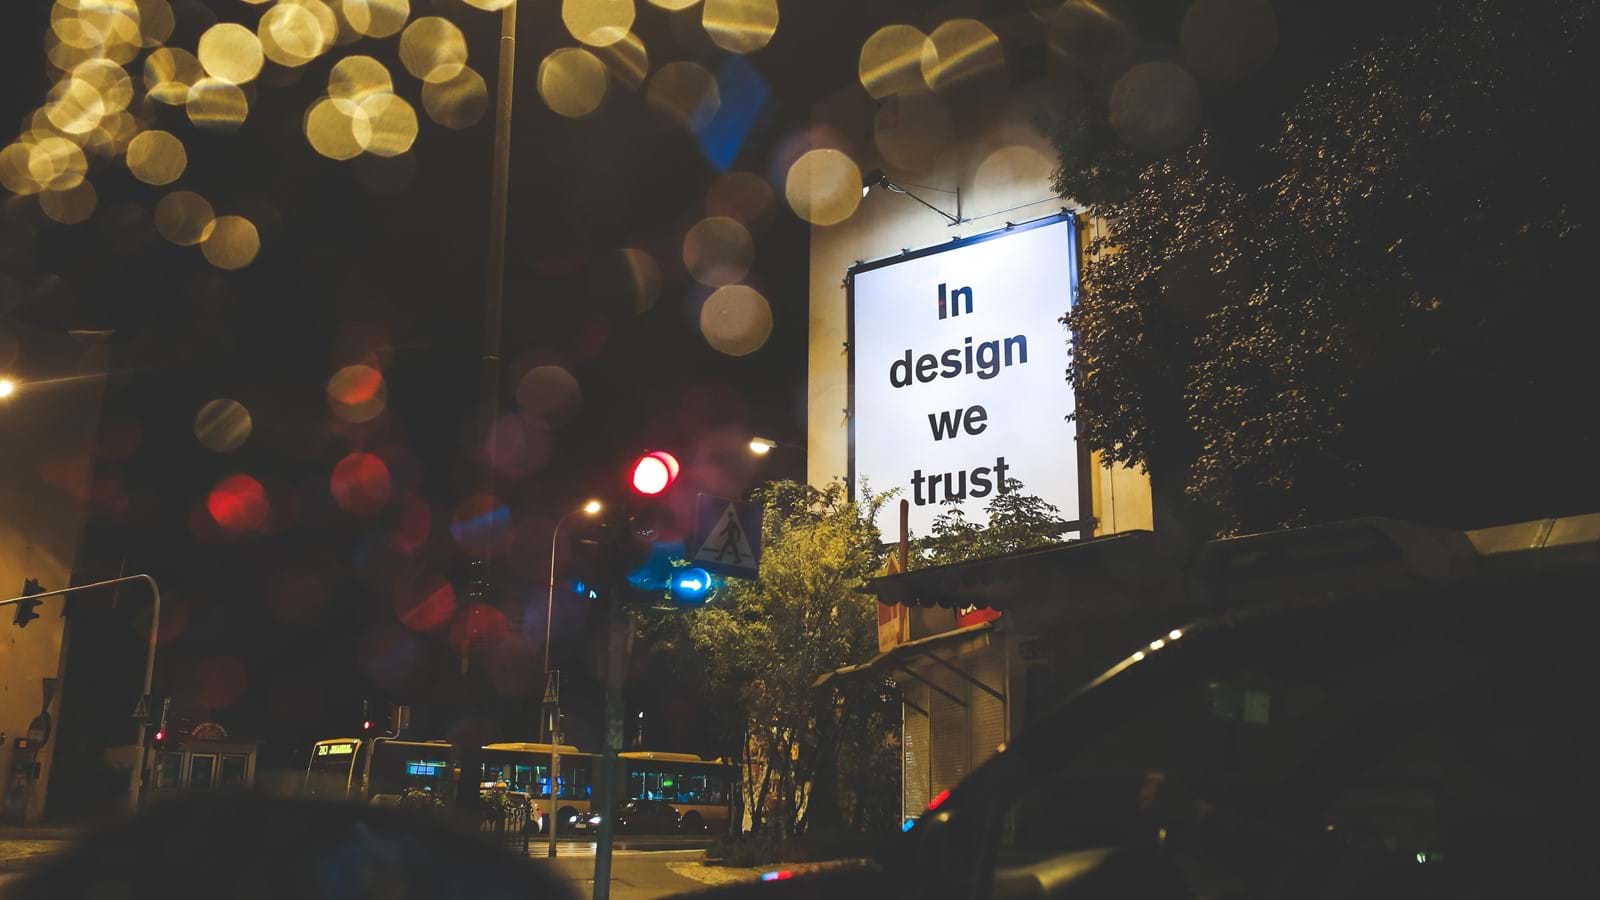 Billboard: In design we trust